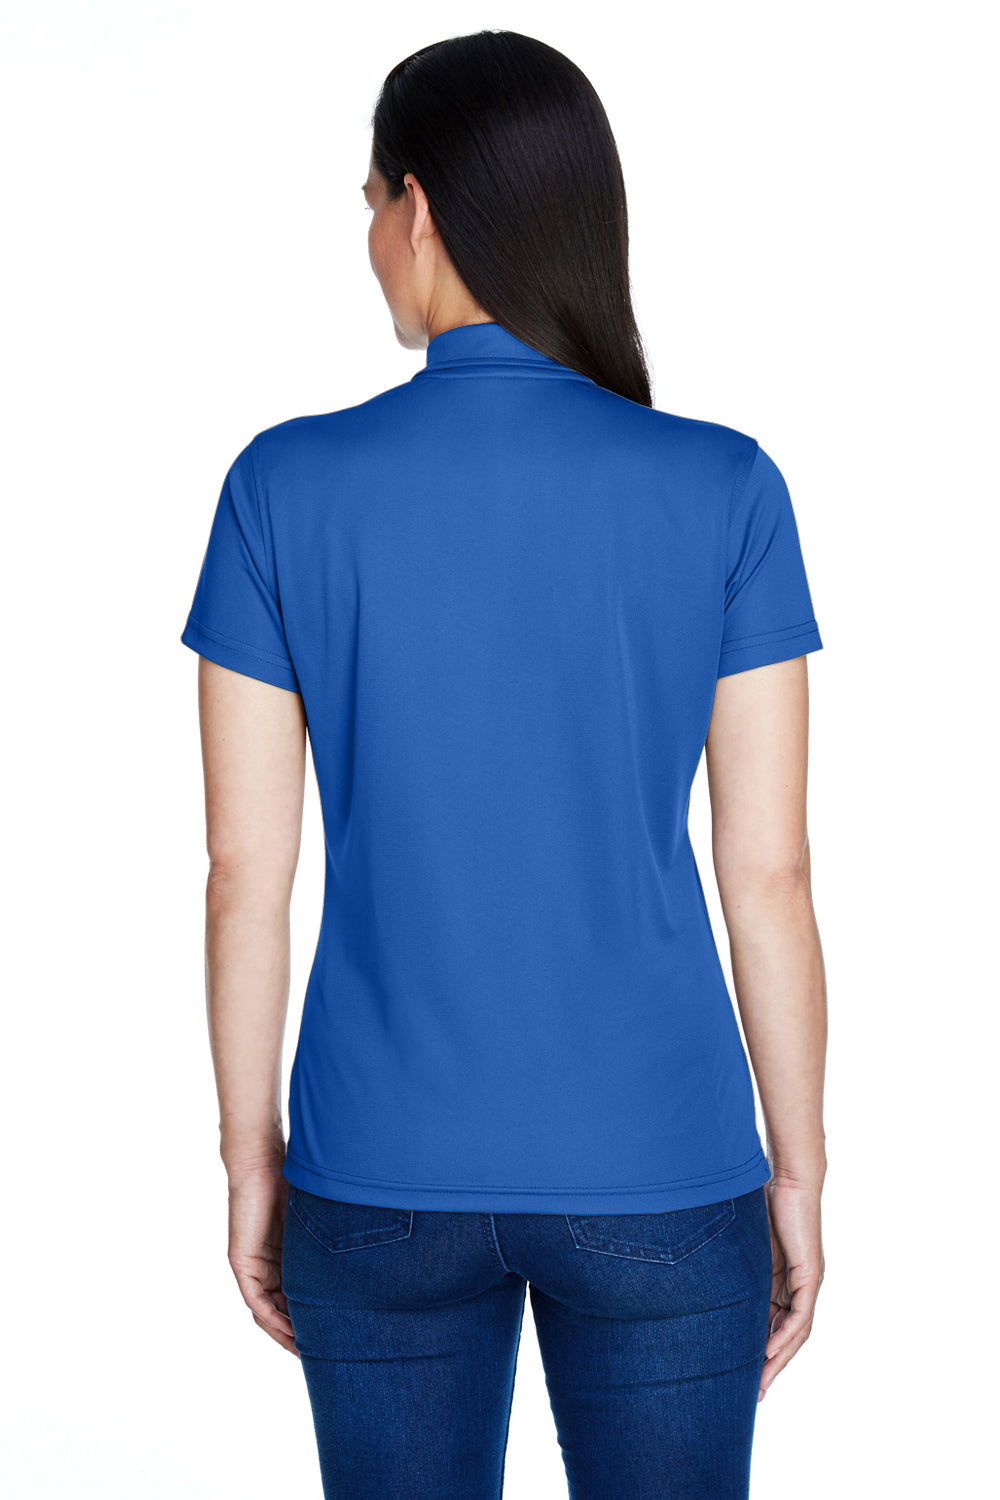 Team 365 TT21W Womens Command Performance Moisture Wicking Short Sleeve Polo Shirt Royal Blue Back